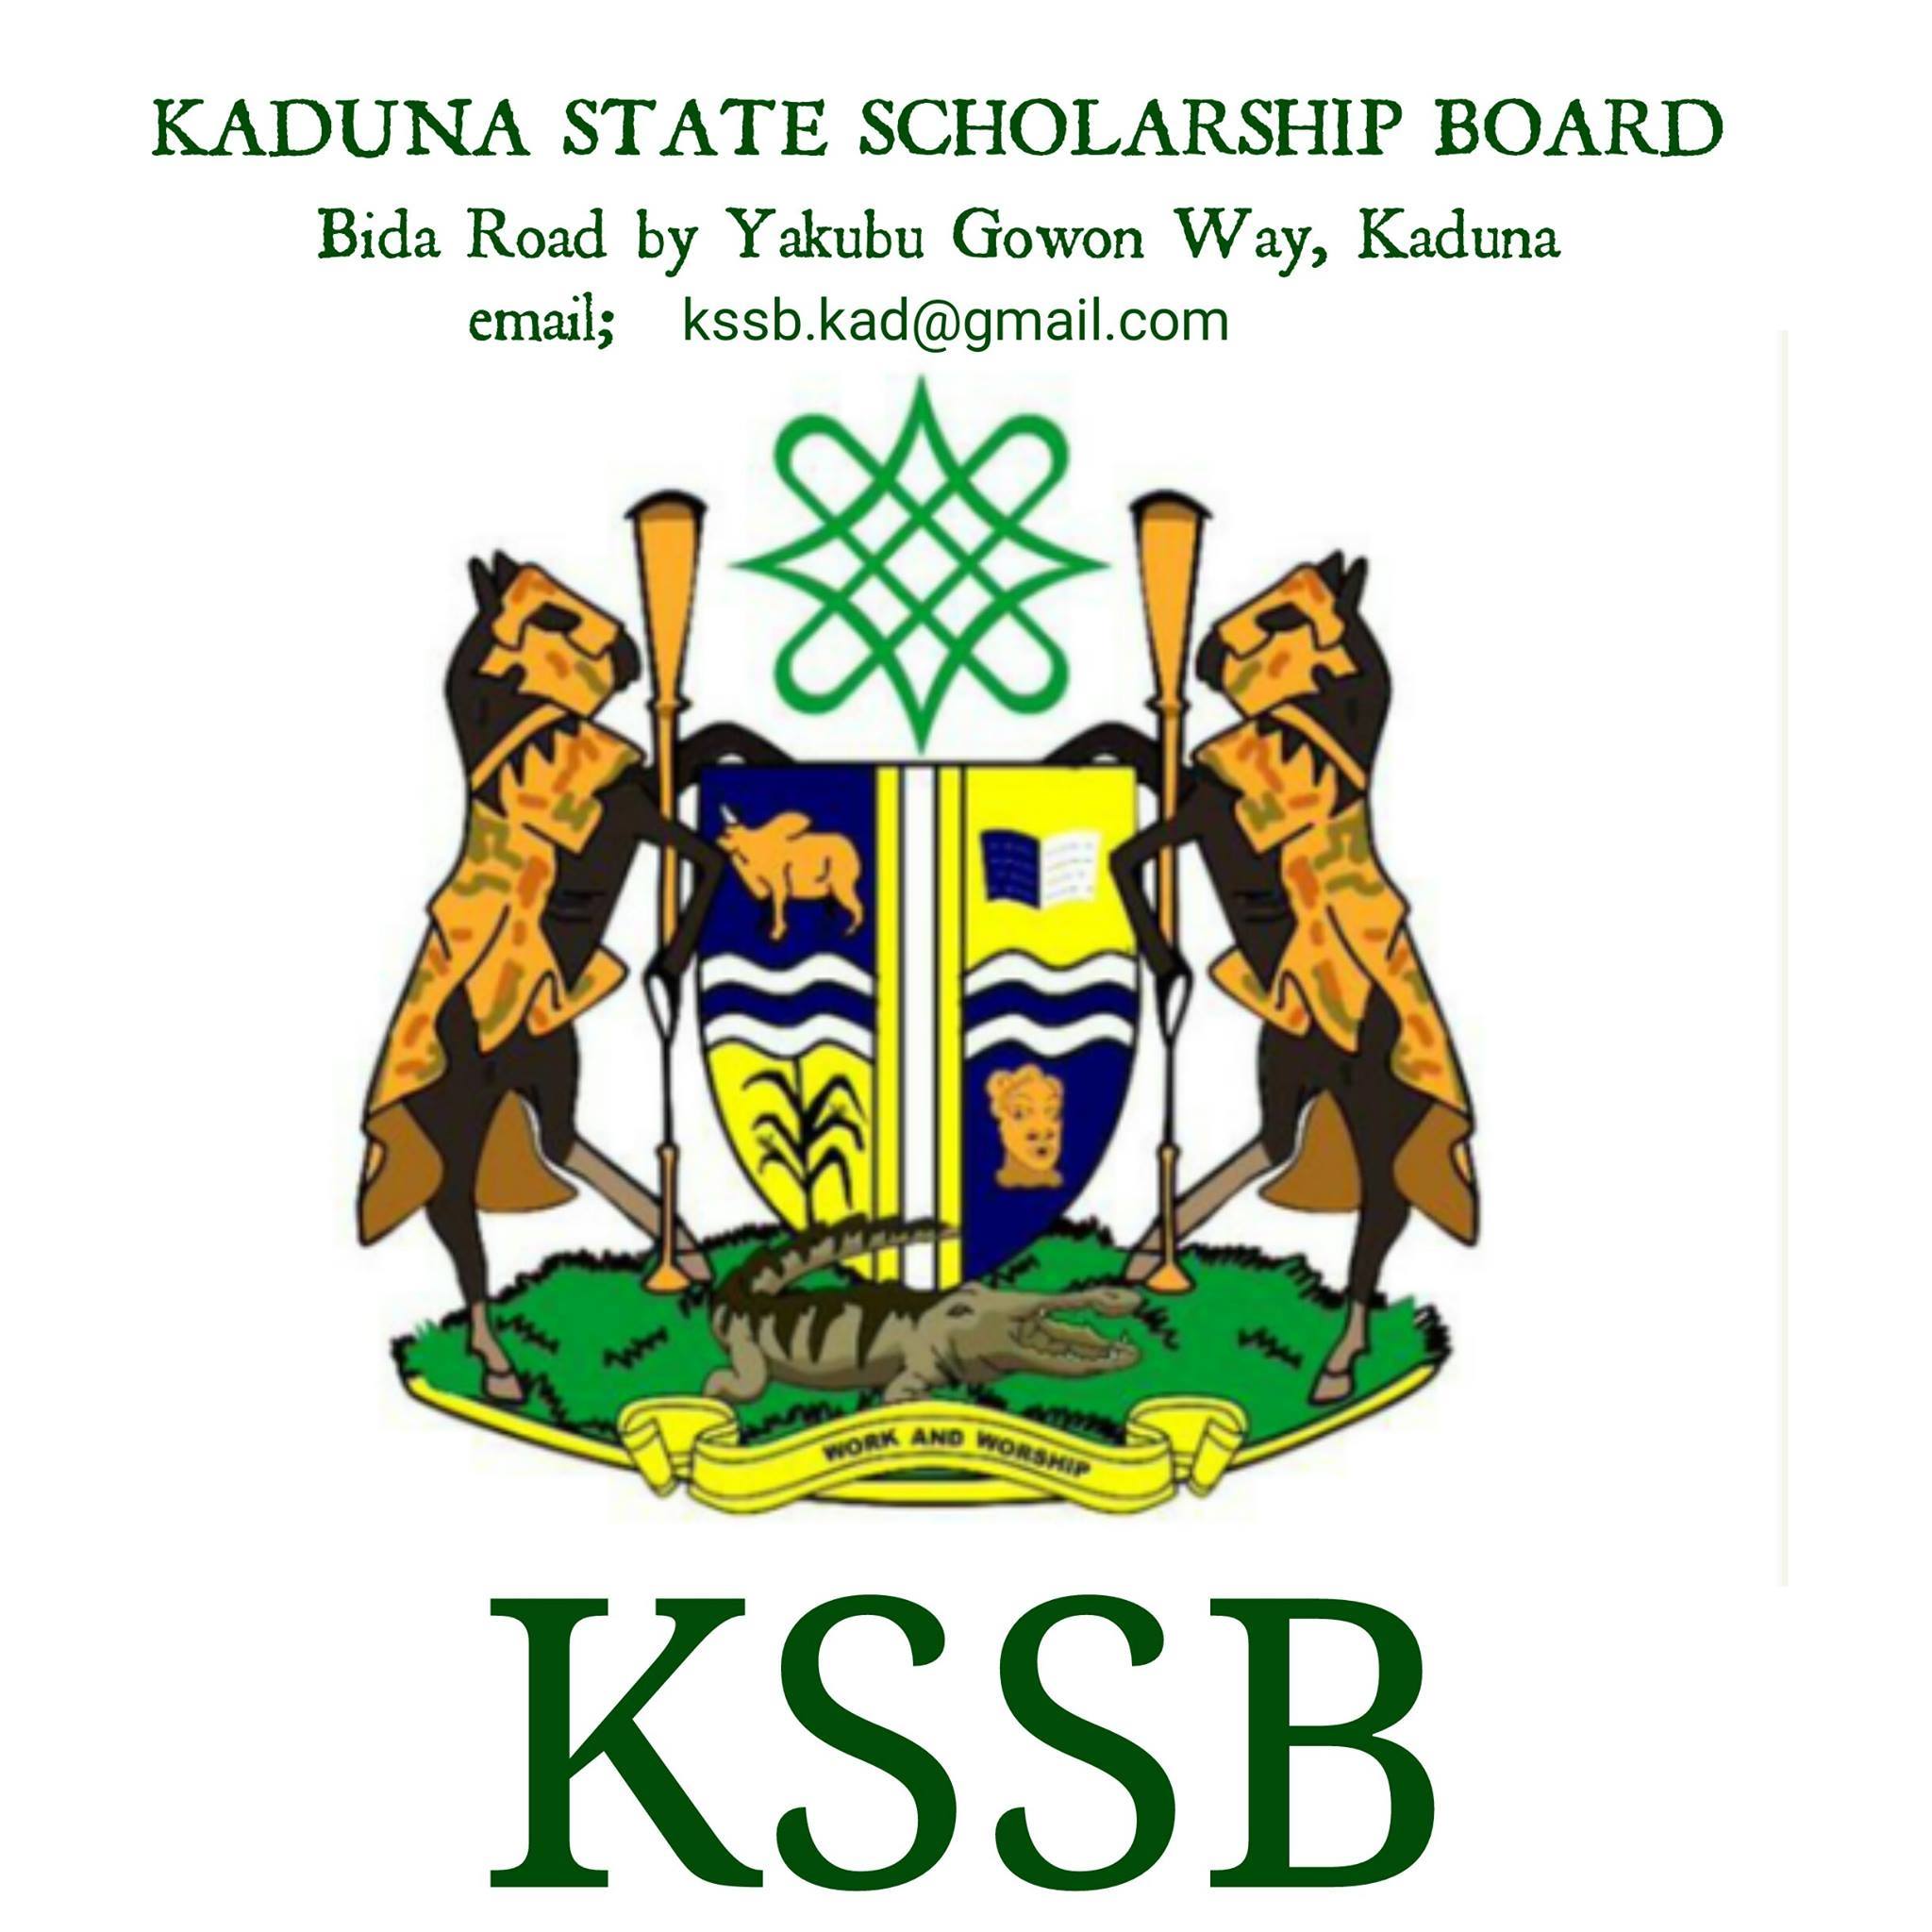 How to Apply for Kaduna State Overseas Scholarship Awards 2018/2019